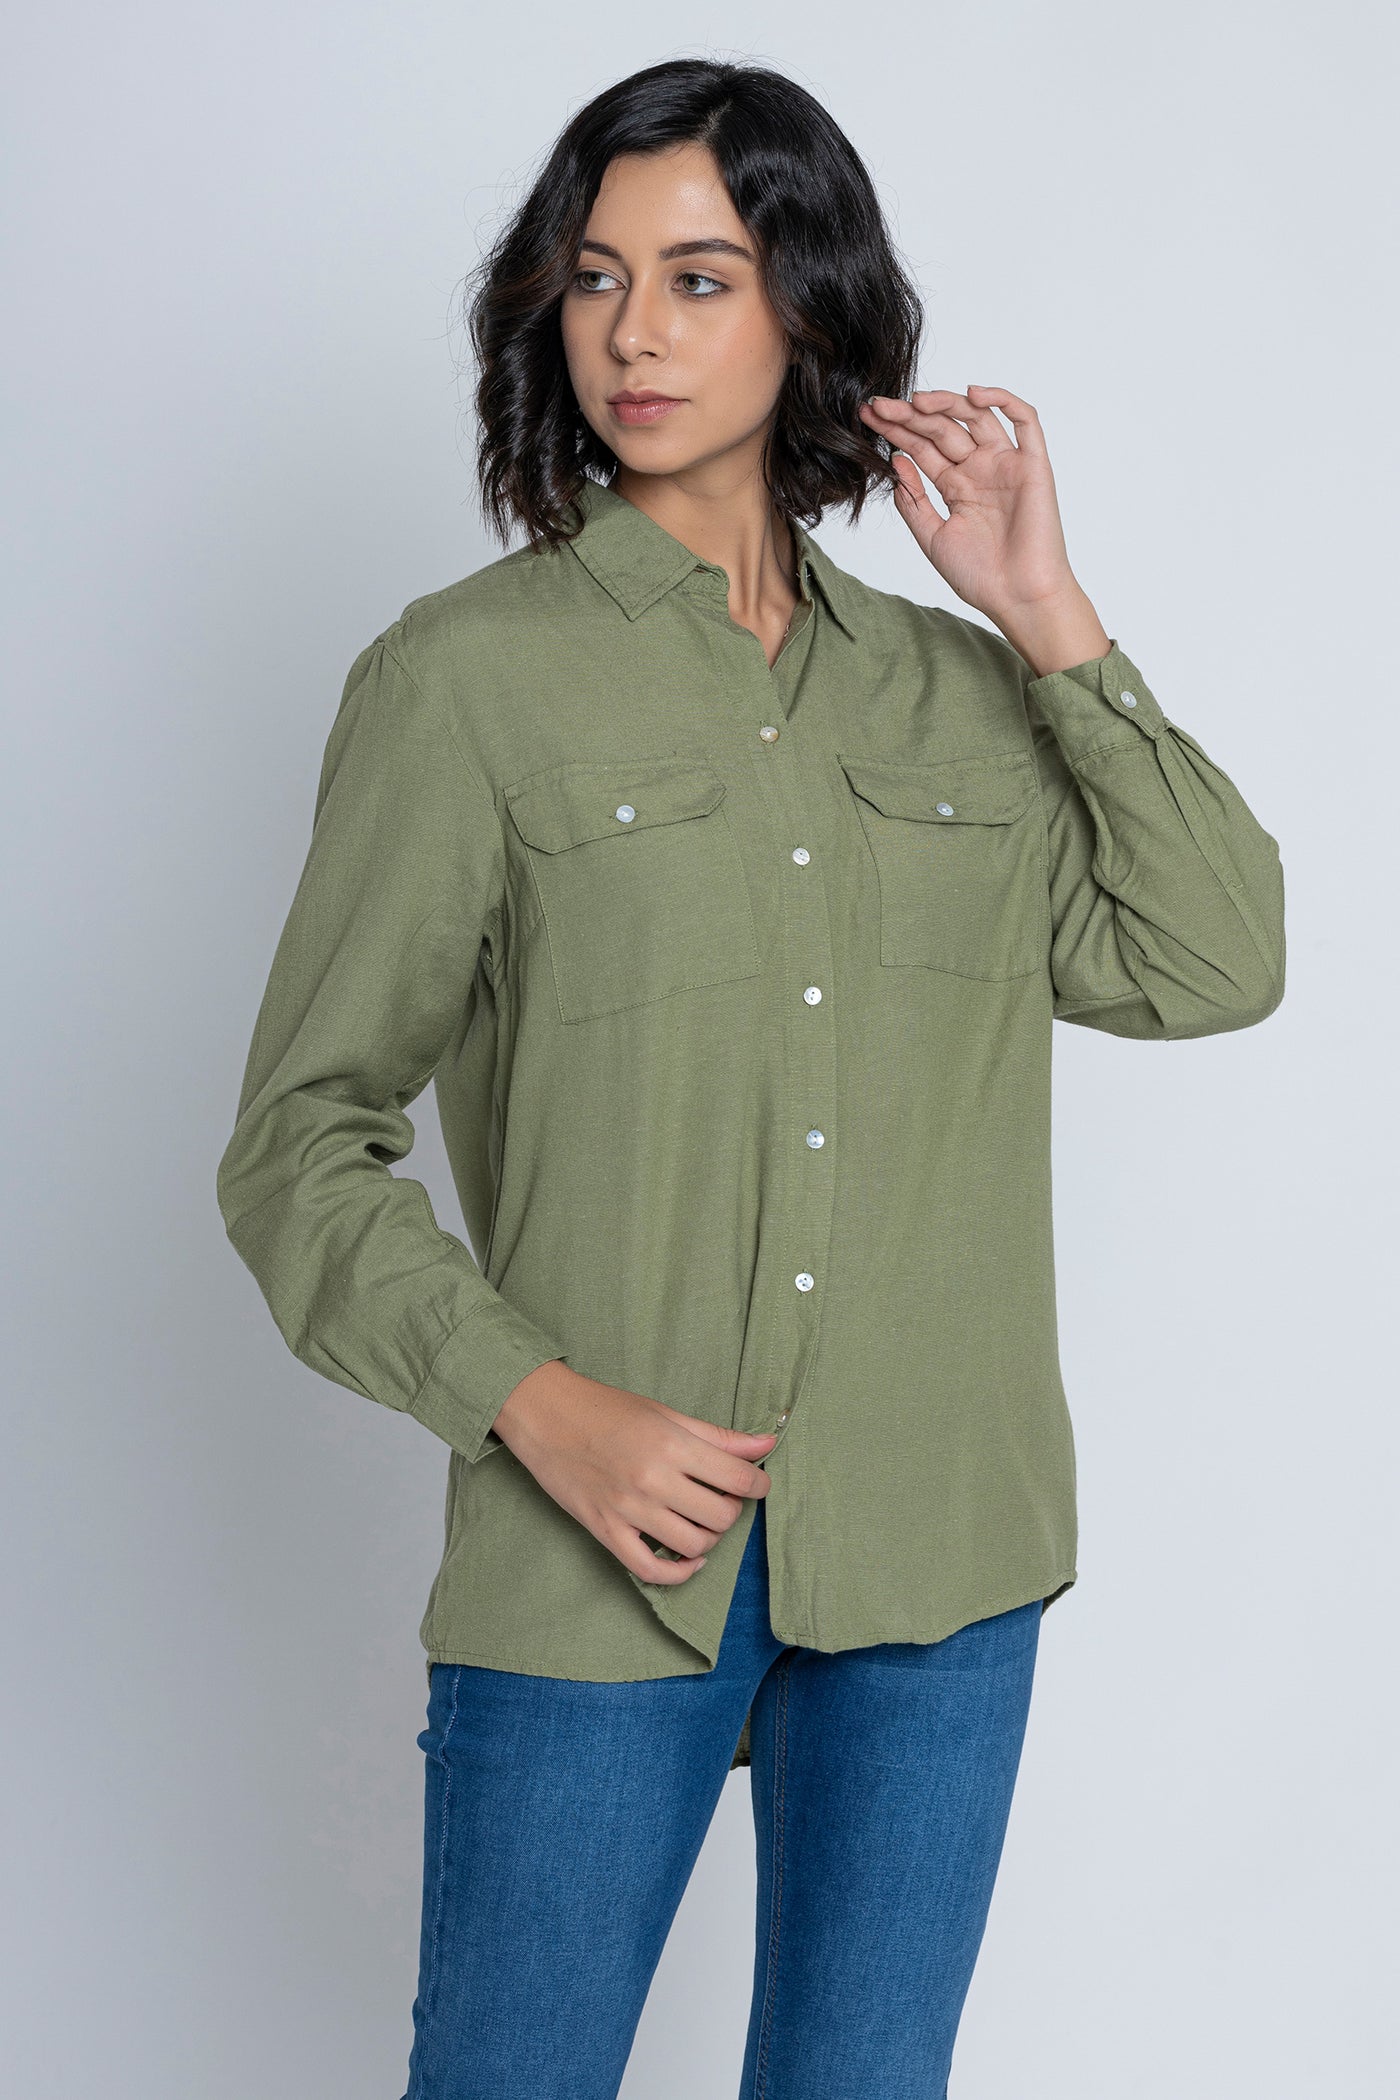 Green Roll-Up Sleeves Shirt